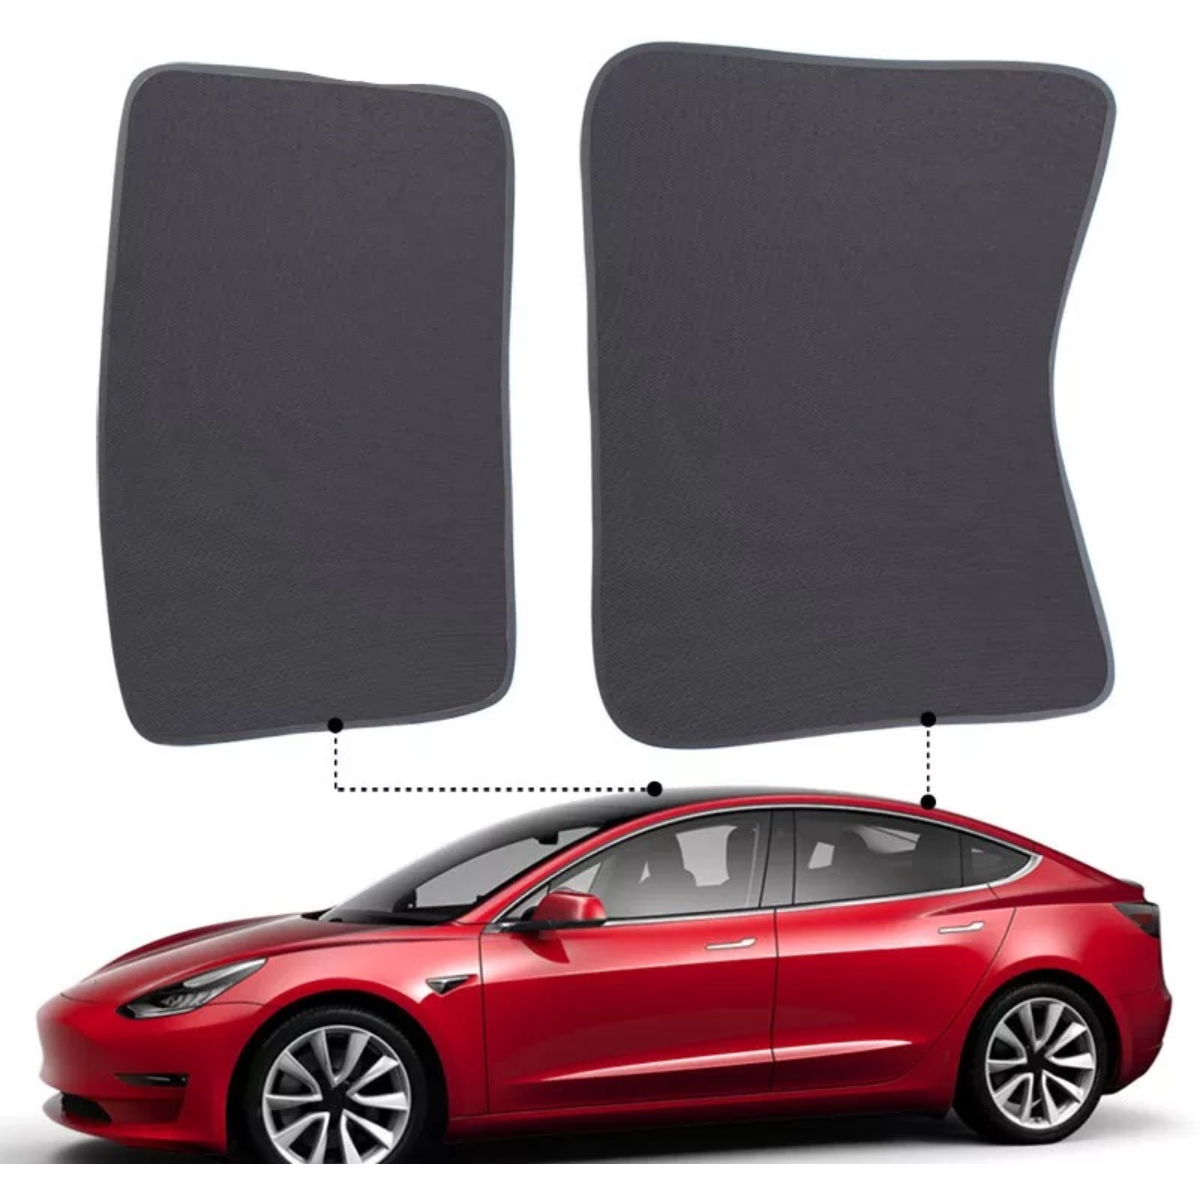 Sonnenschutz-Element Heckscheibe Tesla Model S – E-Mobility Shop